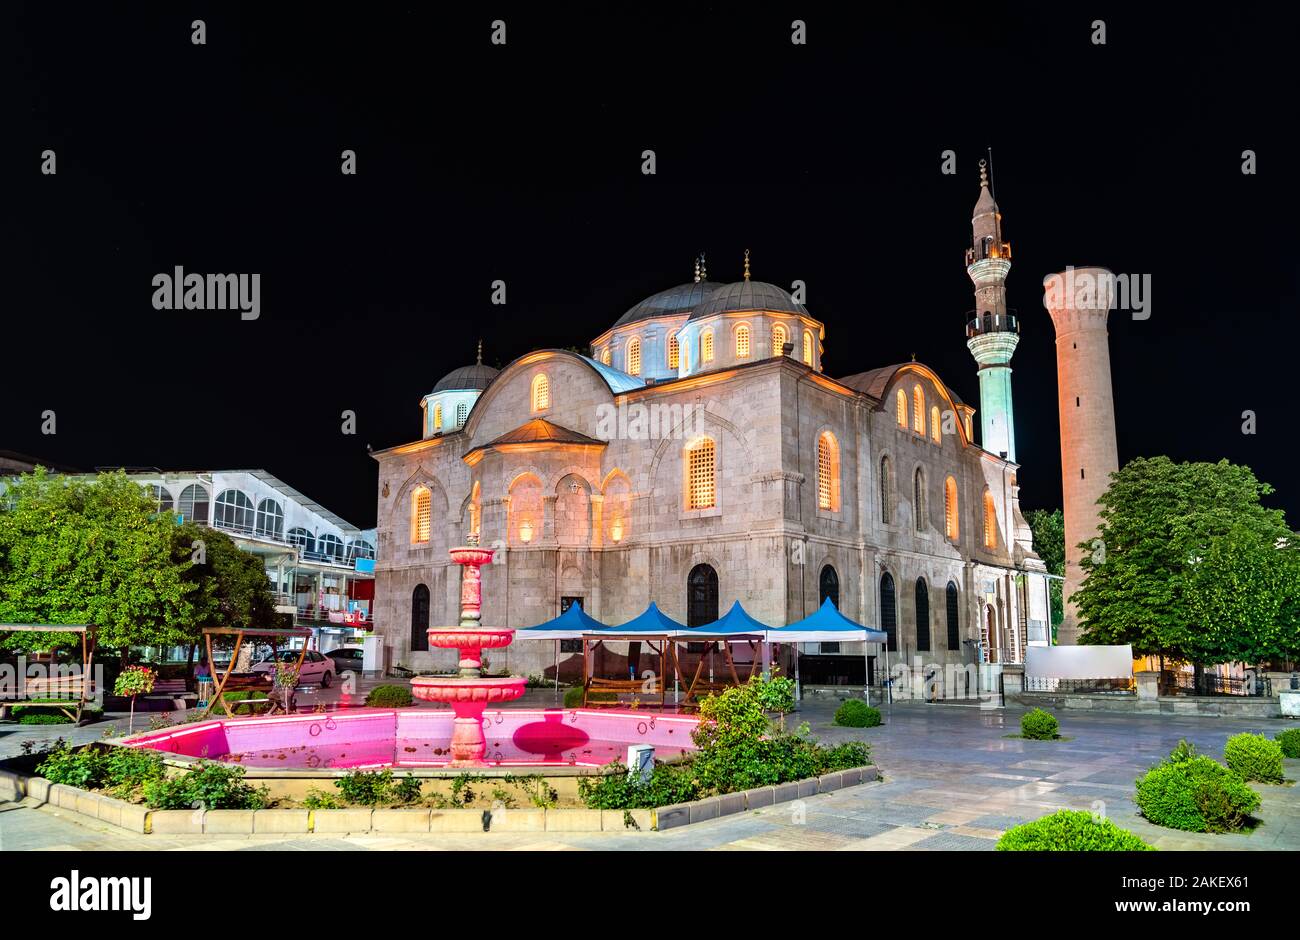 Yeni Camii, a mosque in Malatya, Turkey Stock Photo